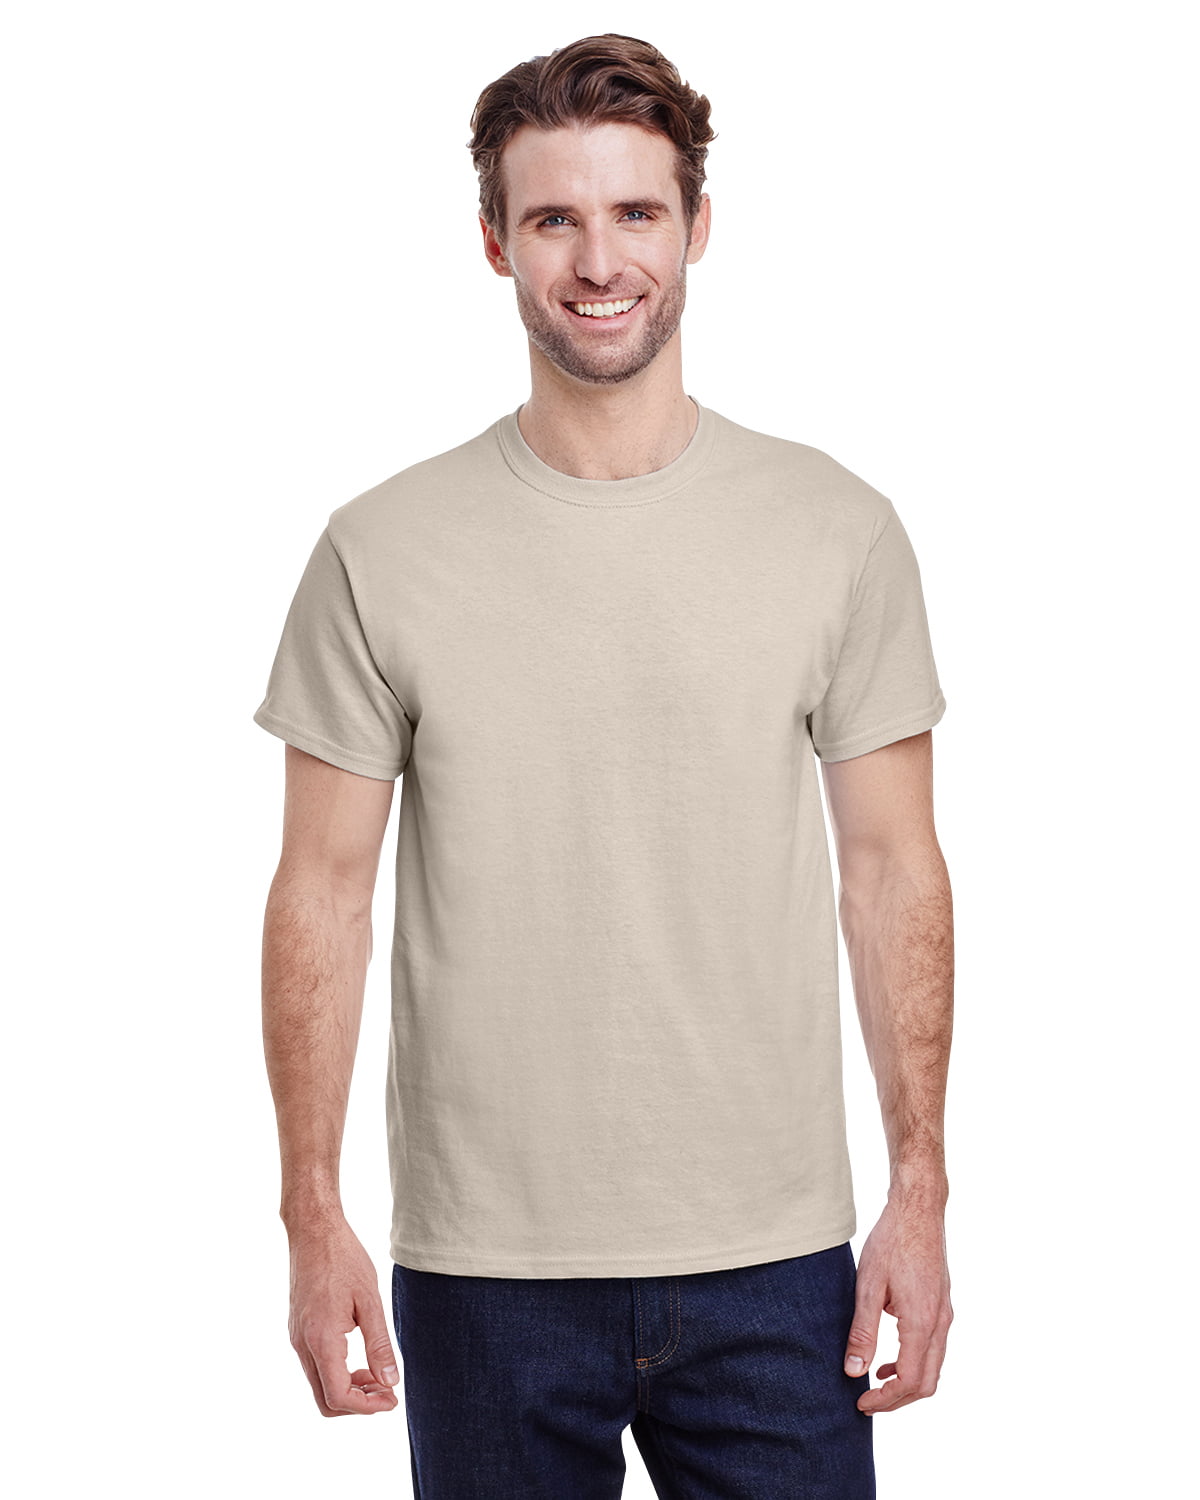 Style # G200 - Original Label 5XL - White Gildan Adult Ultra Cotton 6 Oz T-Shirt 